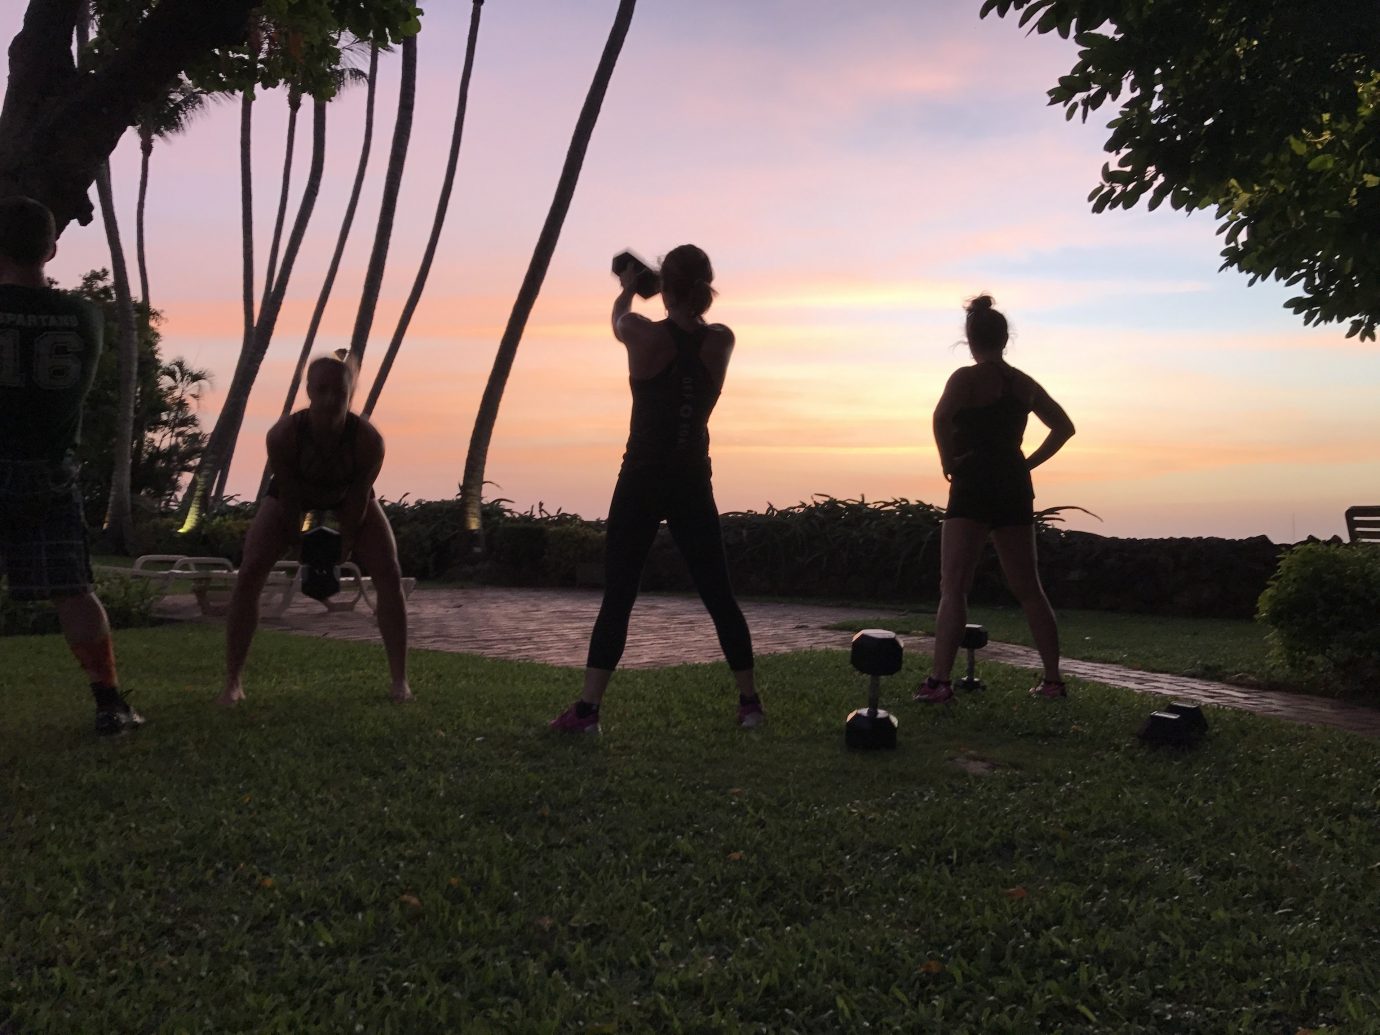 Health + Wellness Meditation Retreats Trip Ideas Yoga Retreats outdoor grass sky tree Sunset sunlight silhouette